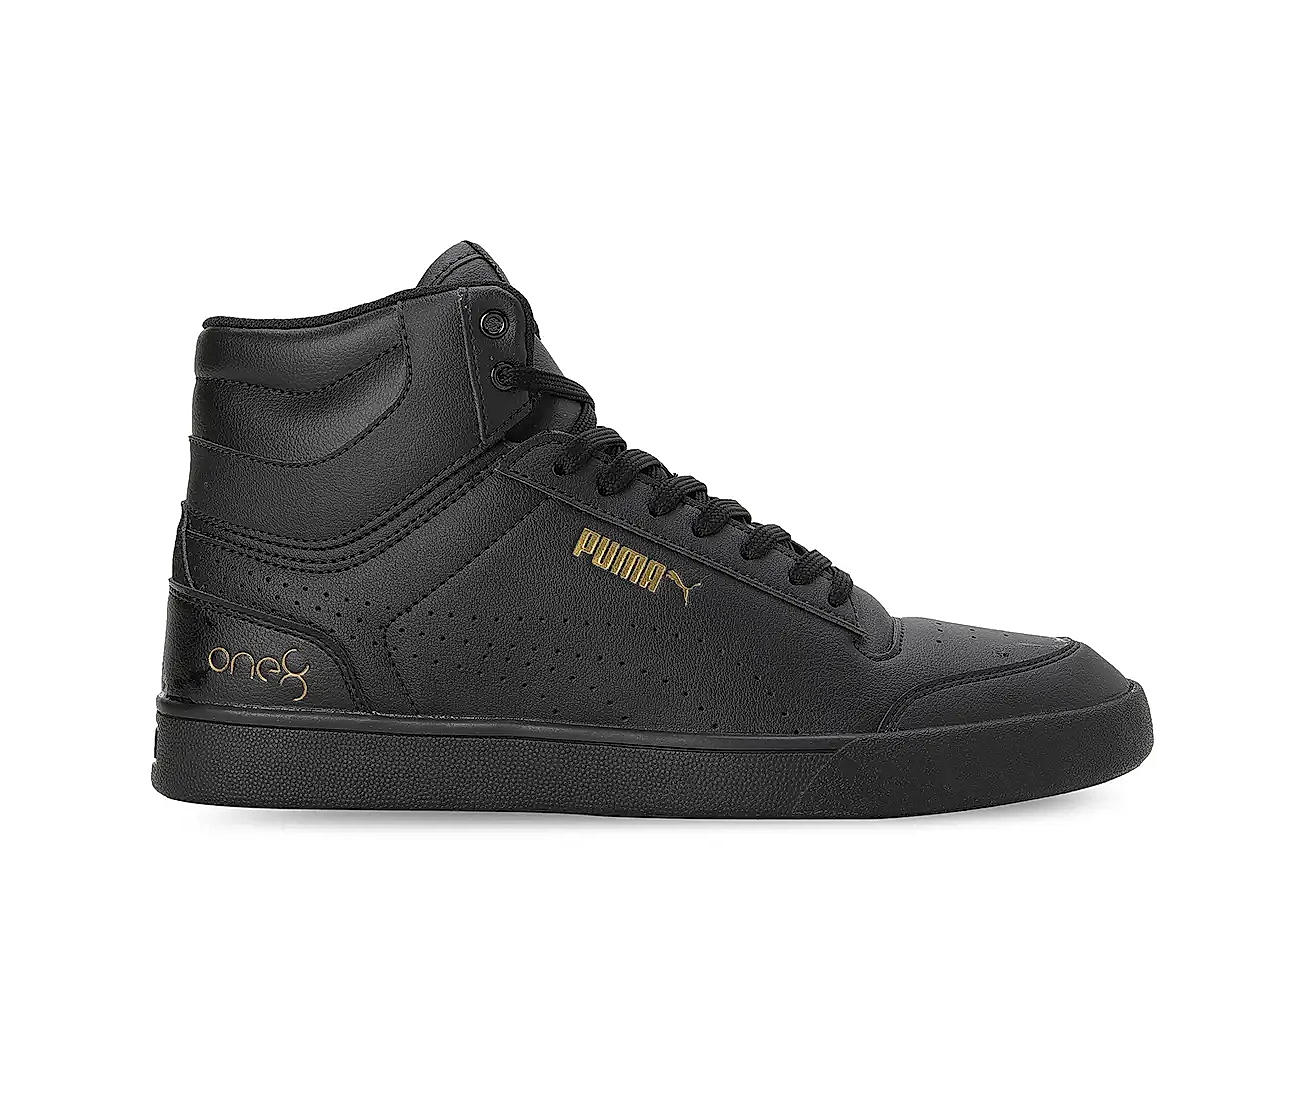 Buy Puma Unisex-Adult Shuffle one8 Black White Team Gold Sneaker - 4 UK  (38100702) at Amazon.in